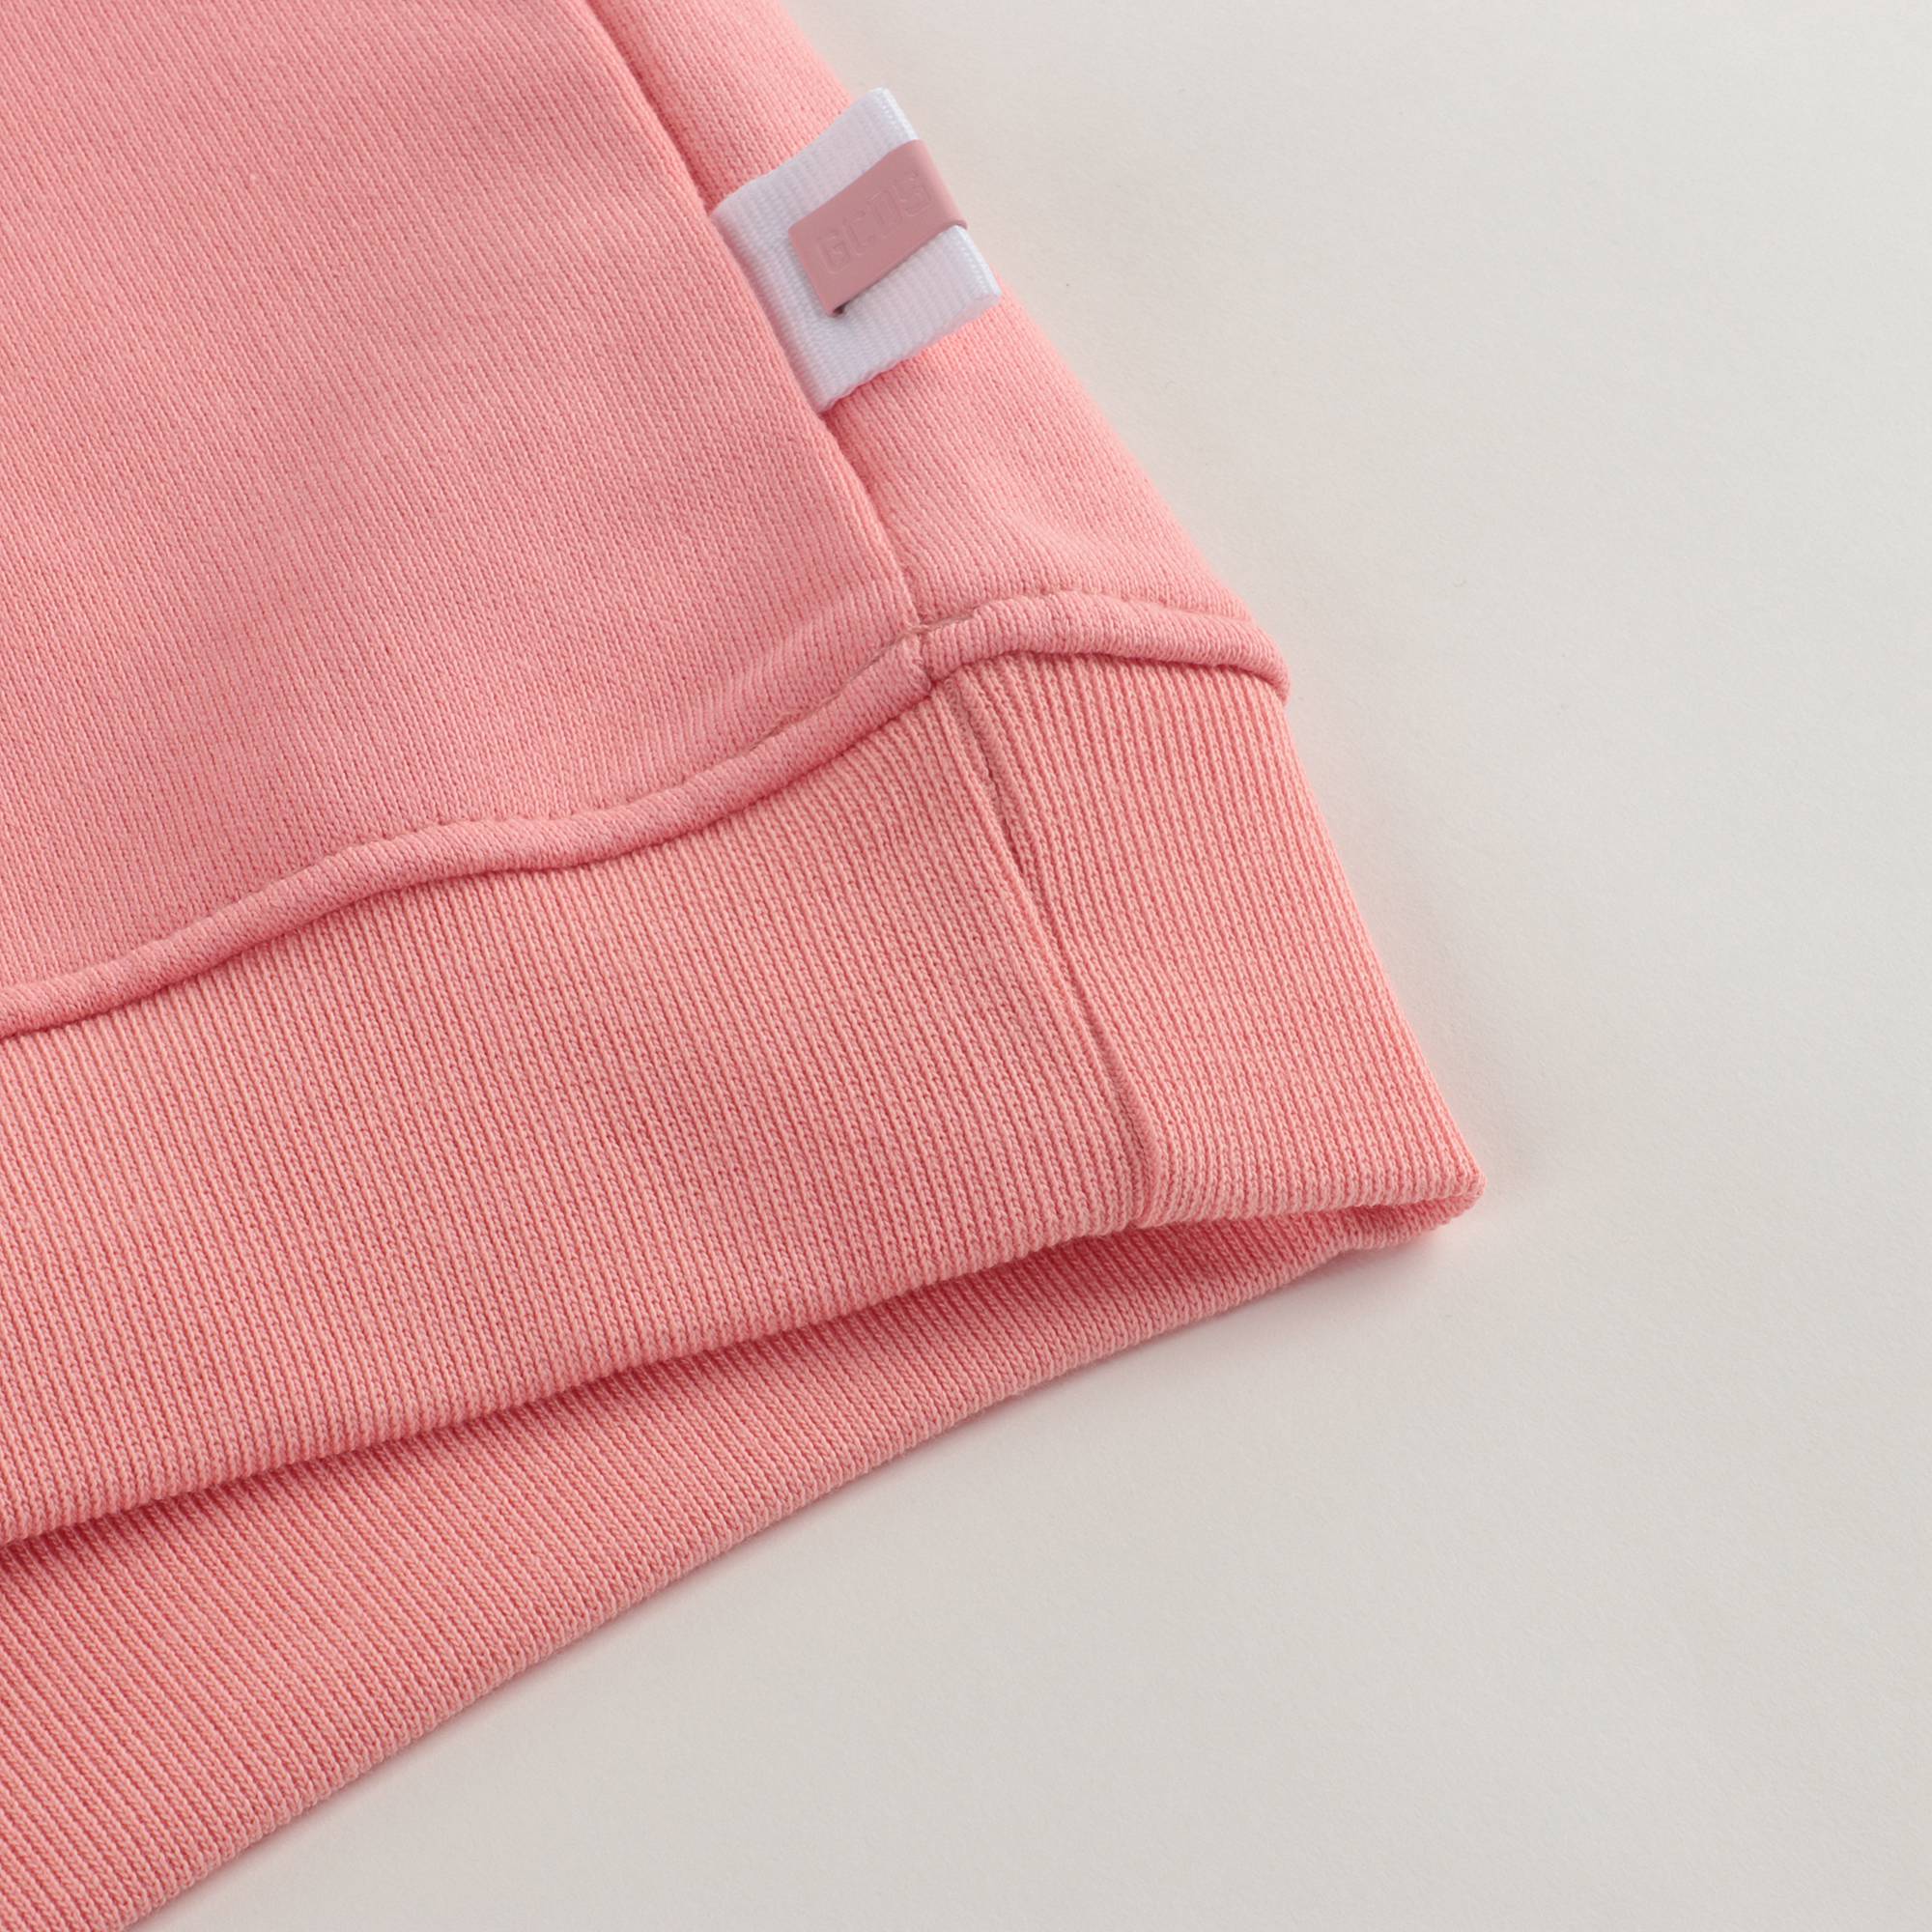 Boys & Girls Pink Logo Hooded Sweatshirt